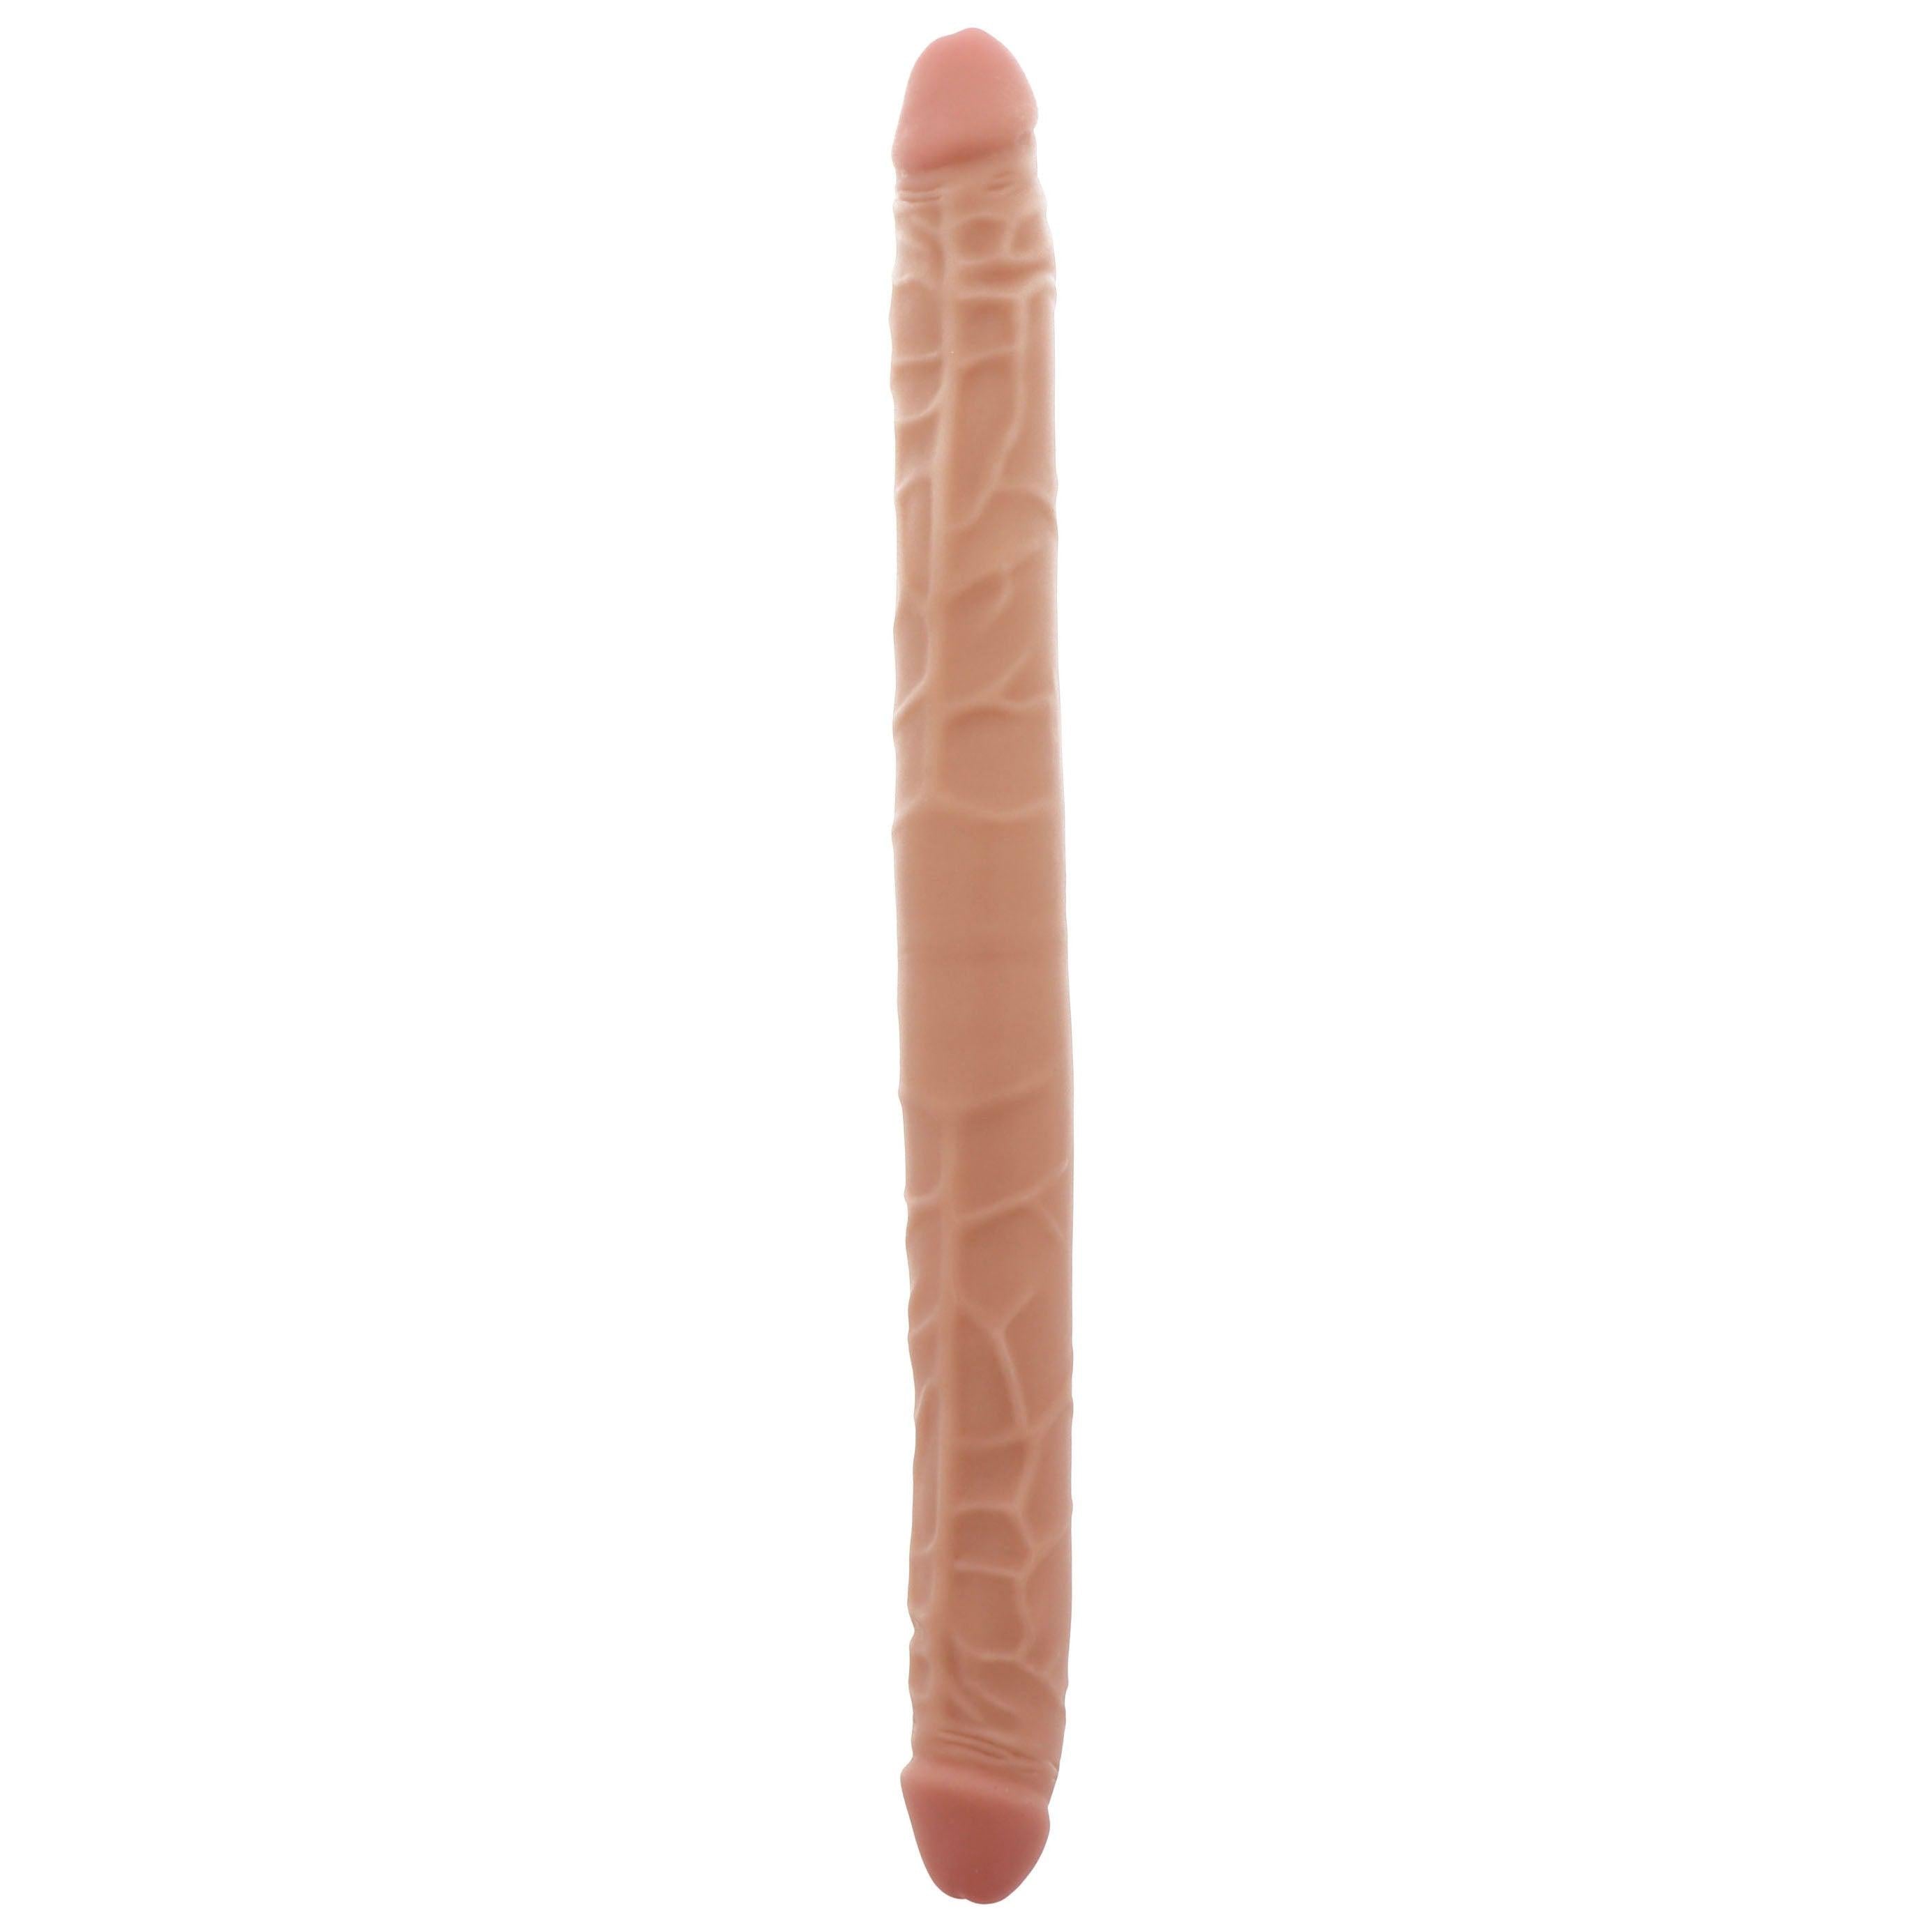 Get Real 16 Inch Flesh Double Dildo - Adult Planet - Online Sex Toys Shop UK